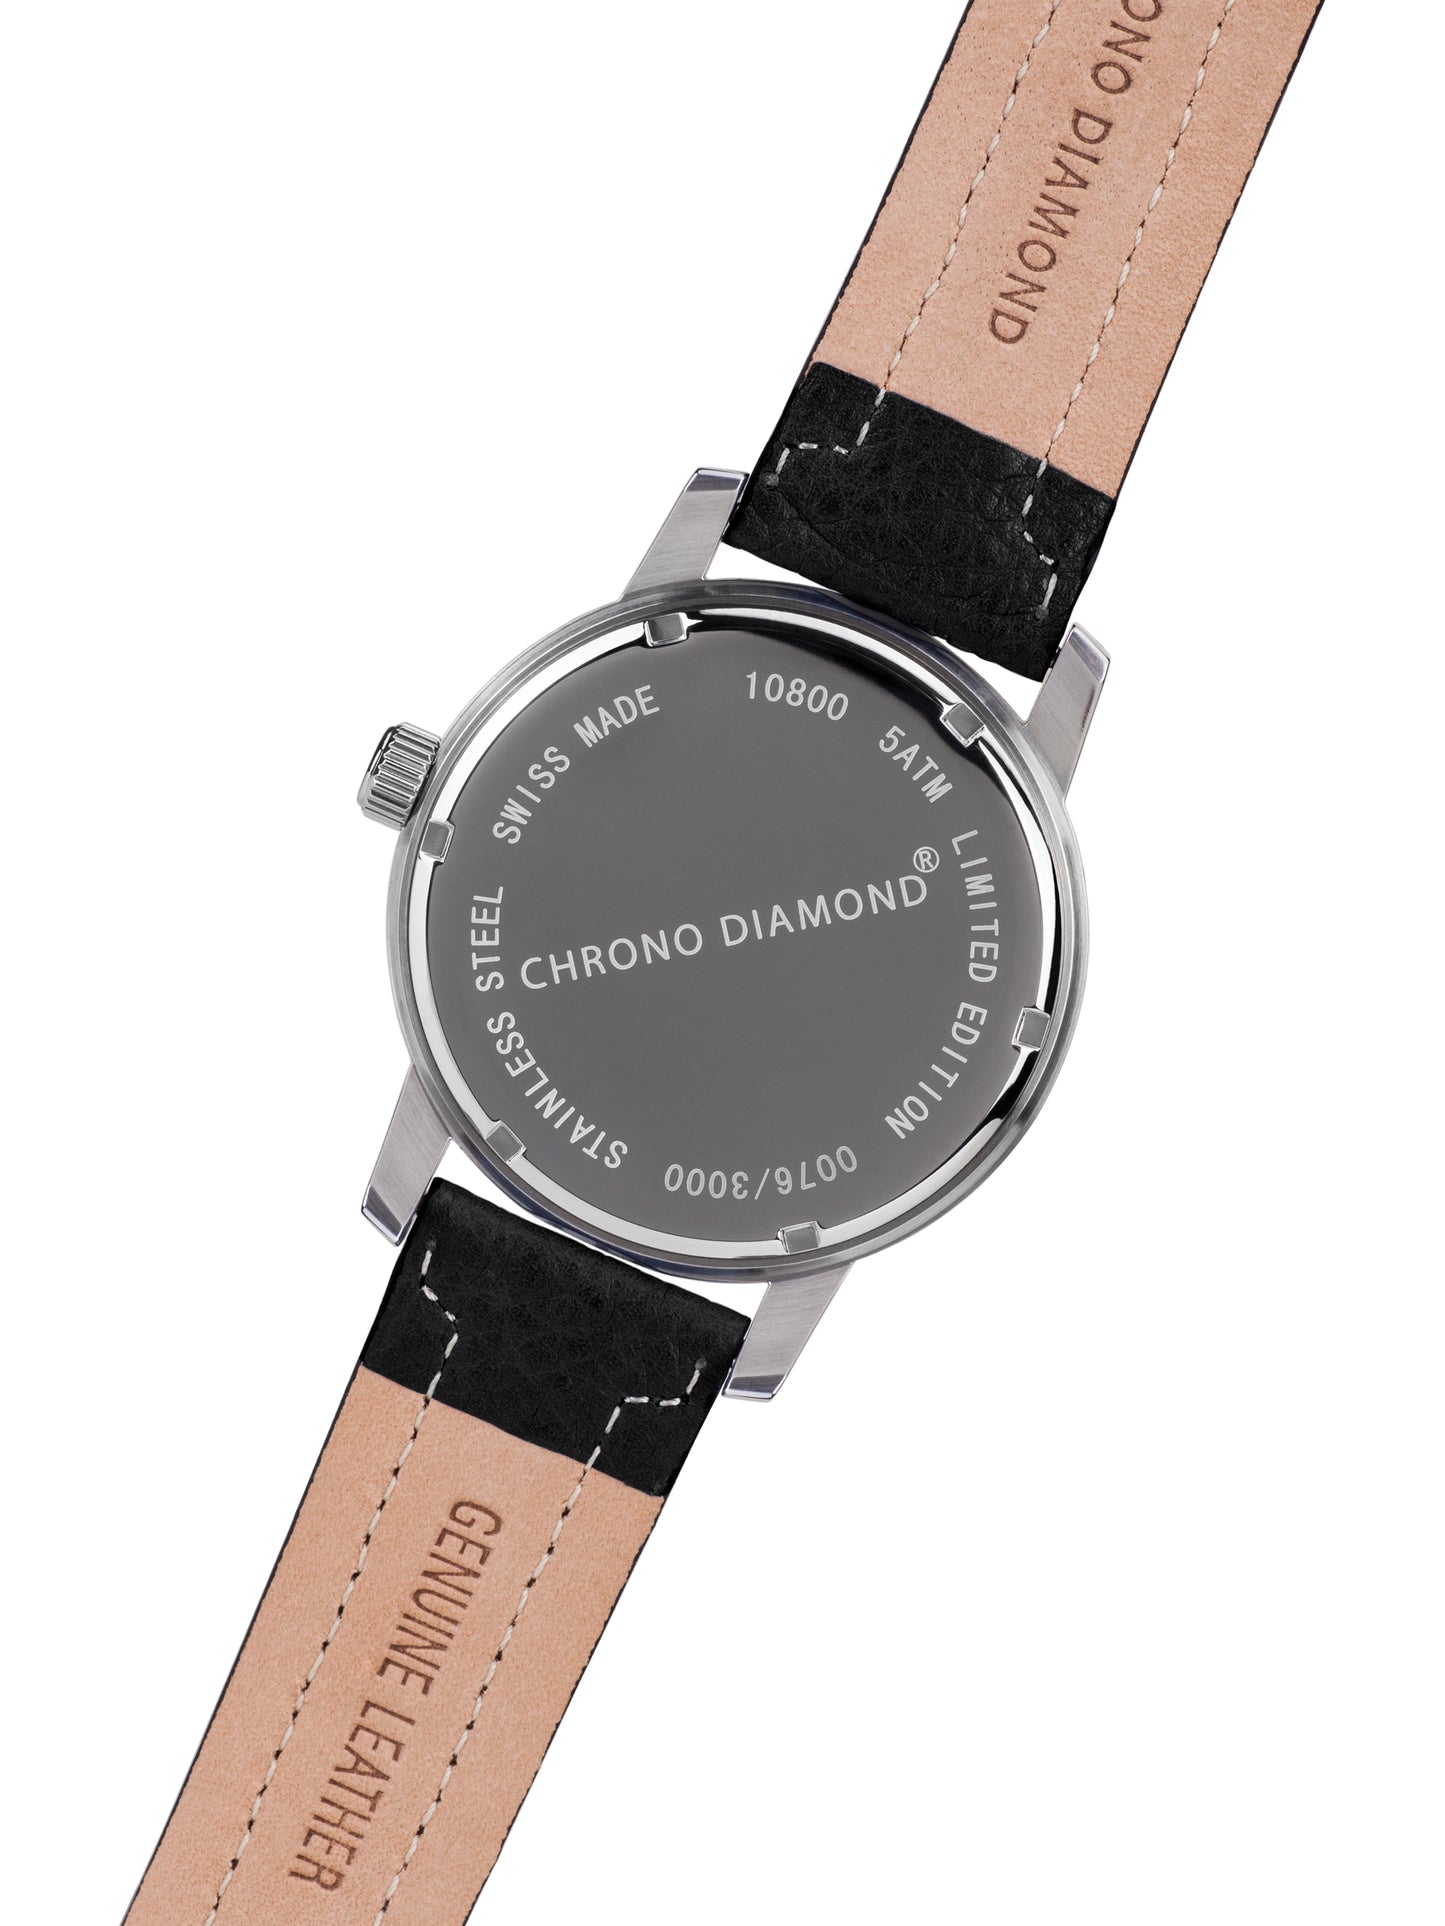 Automatic watches — Nereus — Chrono Diamond — black